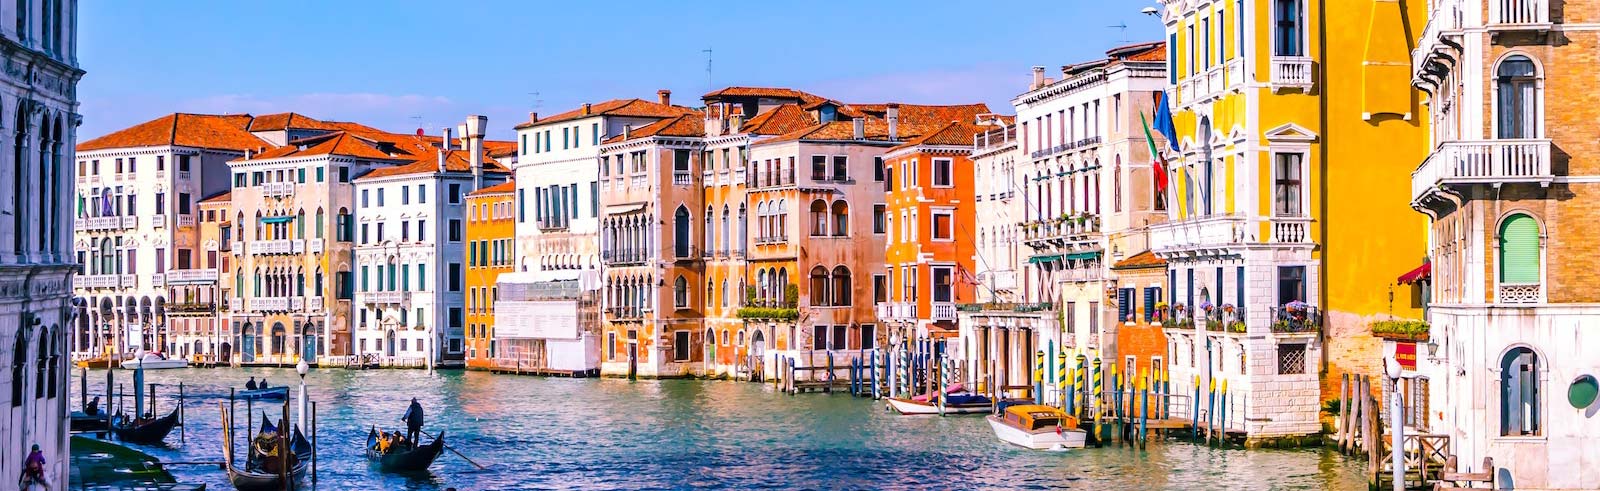 Venedig Italien Kanal mit bunten Gebäuden